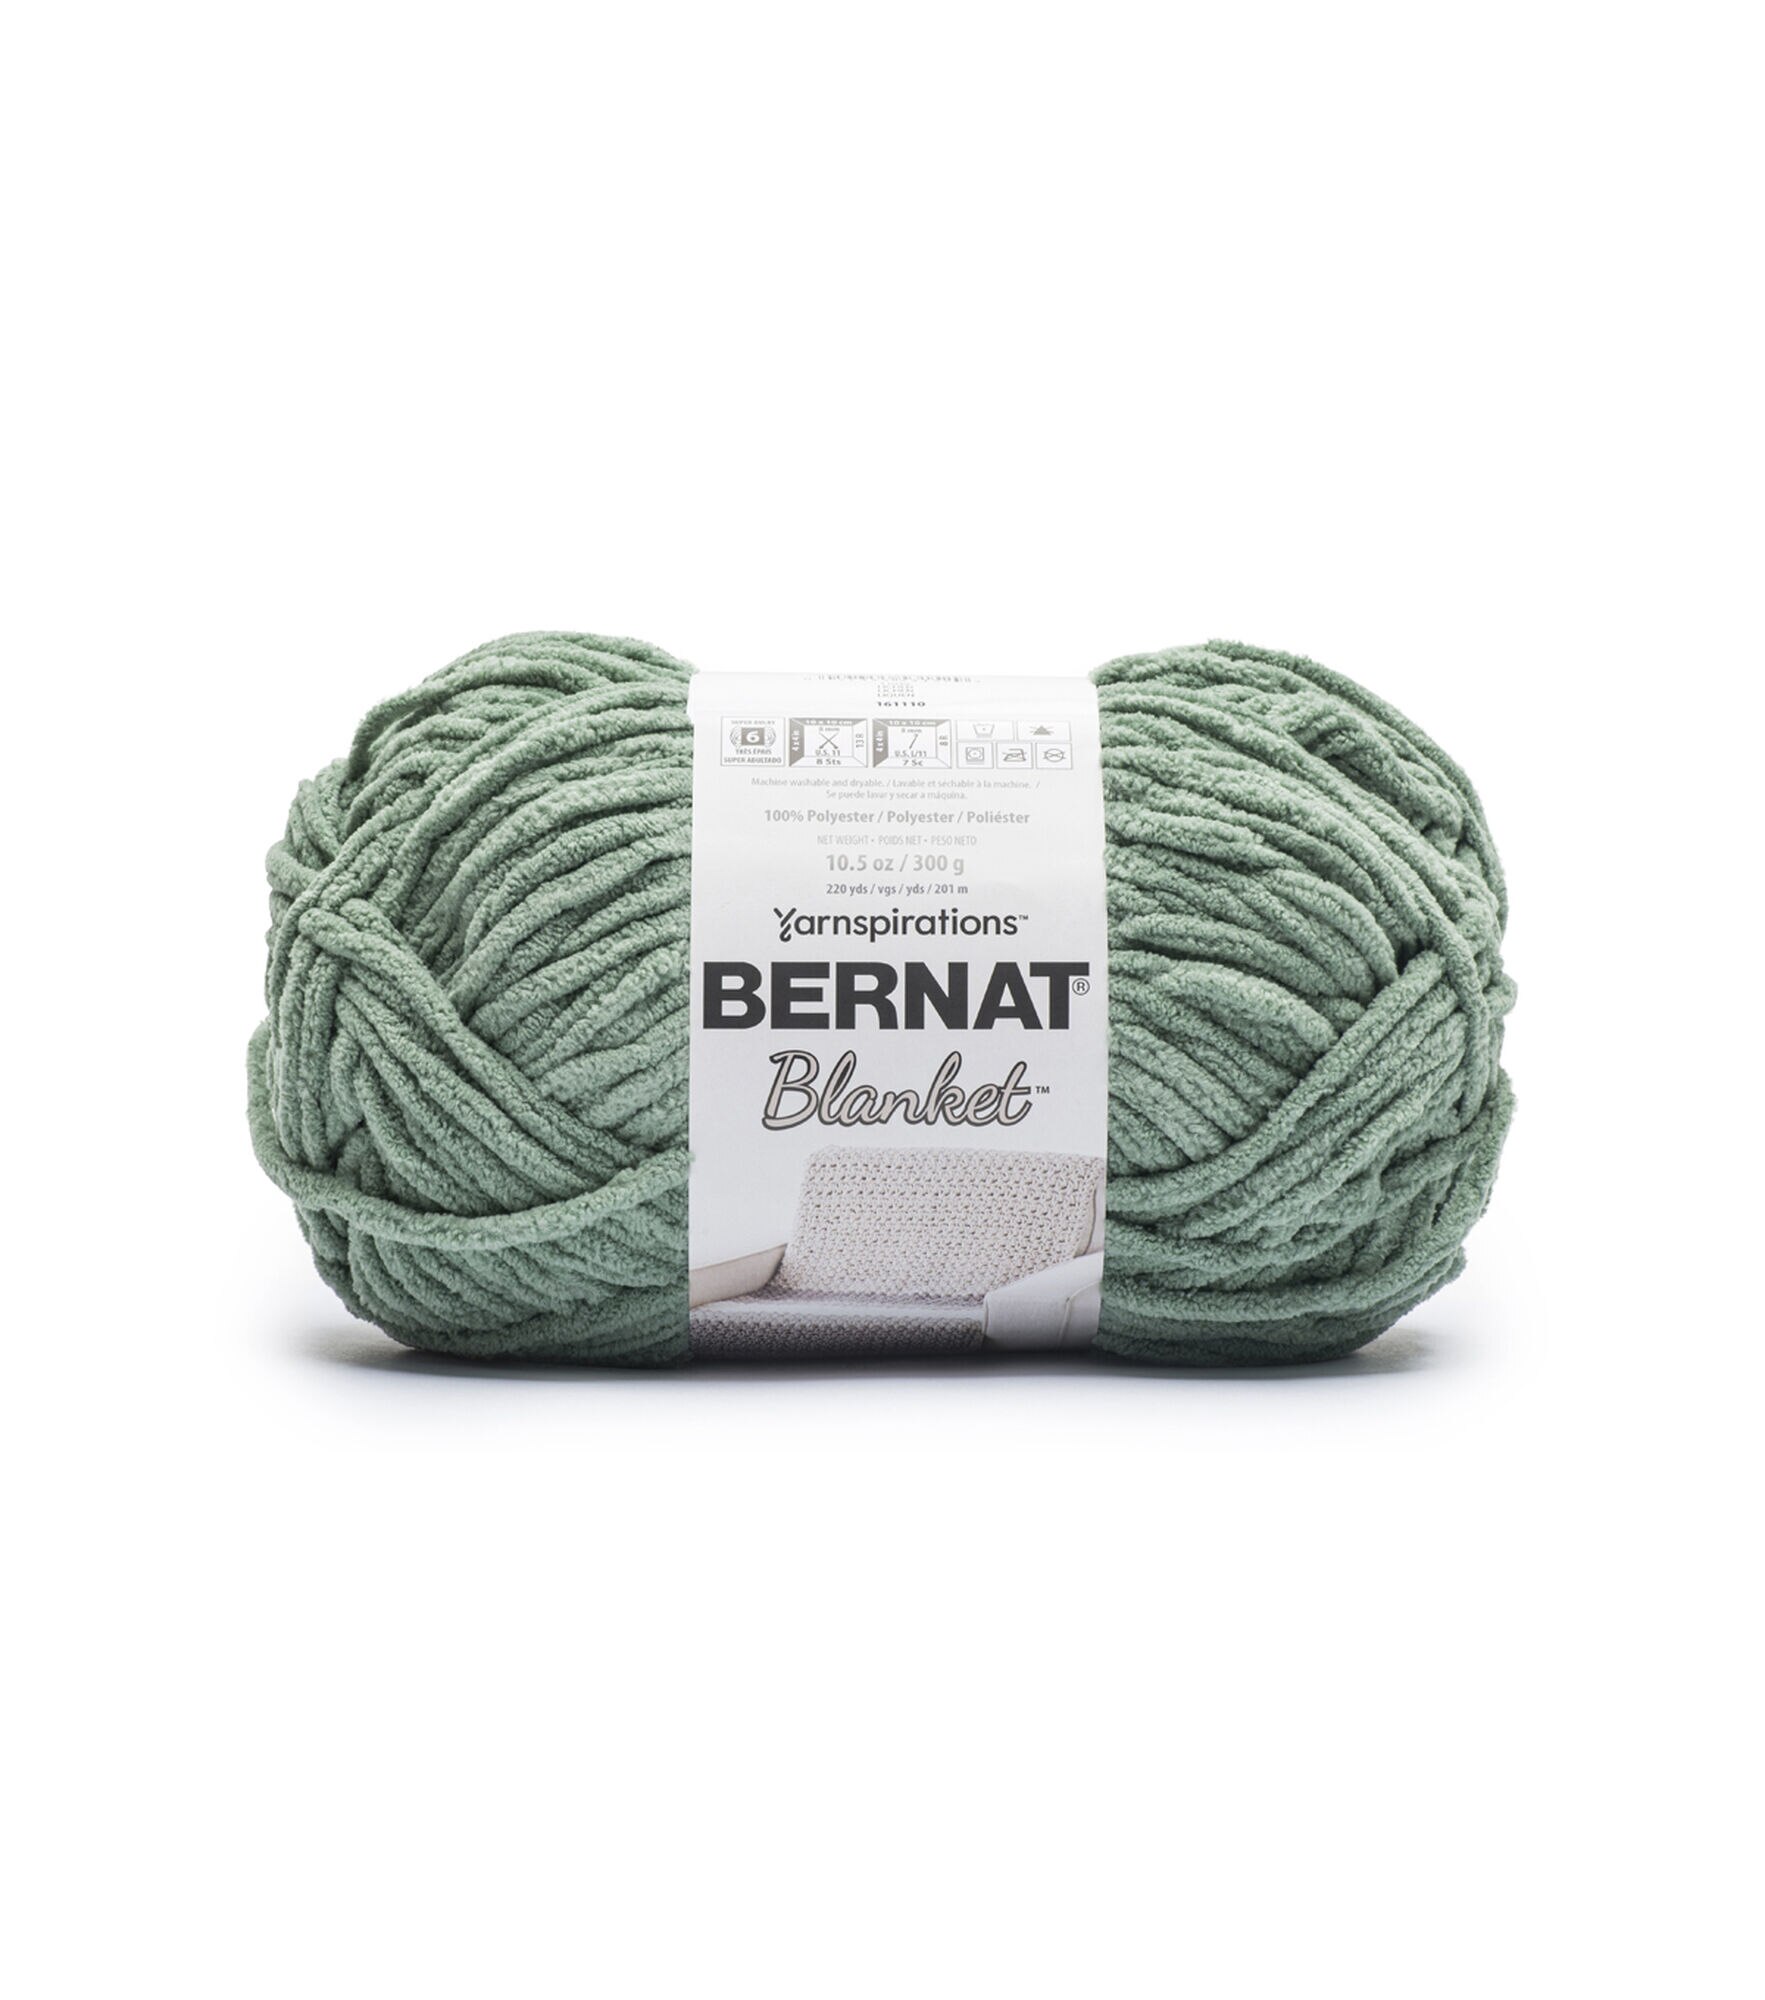 Bernat Blanket Big Ball Yarn-Sunshine Green, 1 count - Harris Teeter